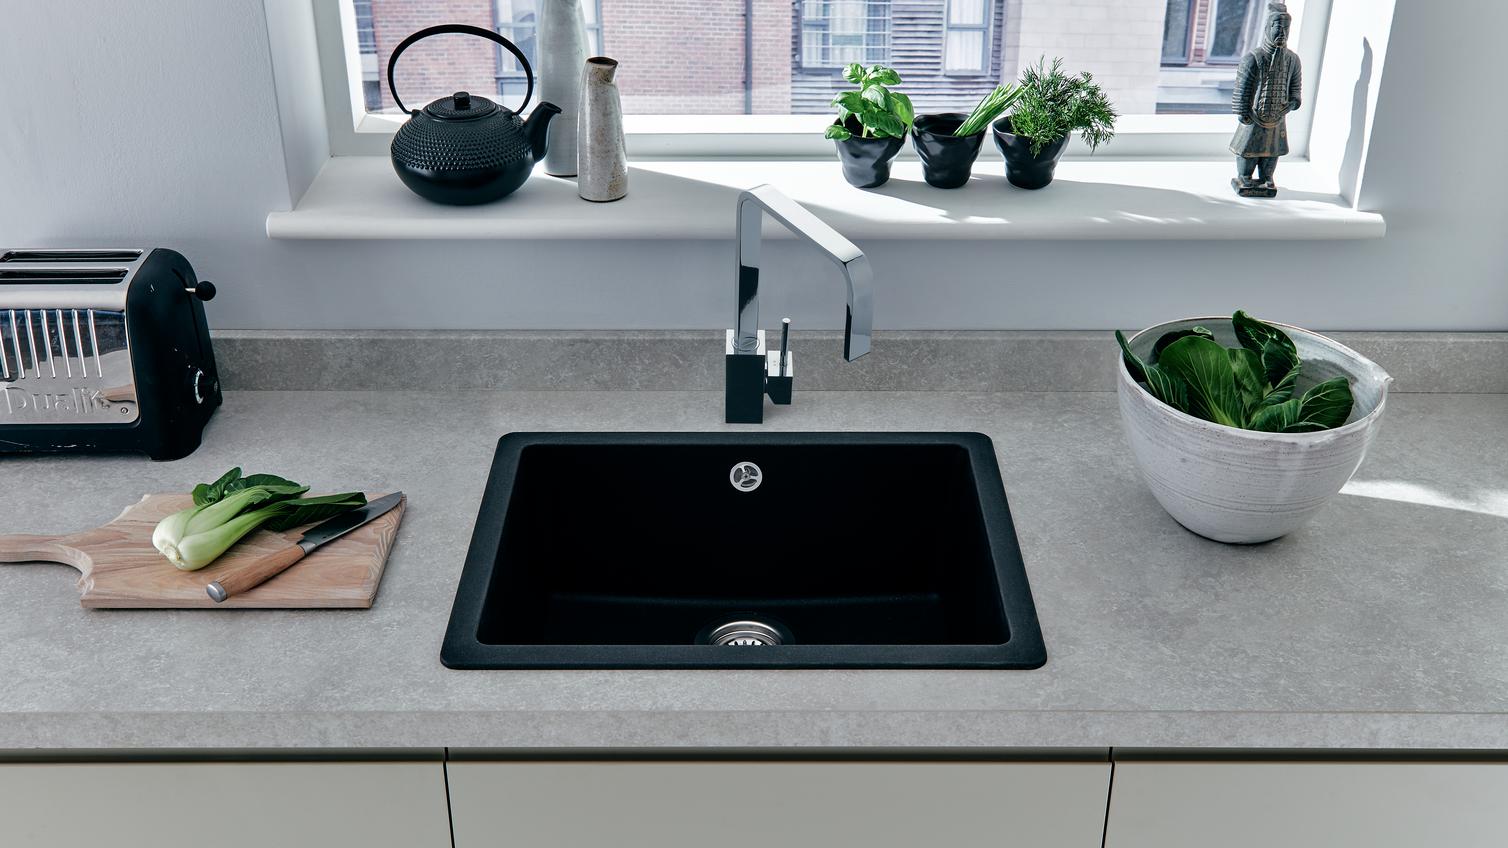 Lamona Black Granite Composite Inset/Undermount Single Bowl Sink